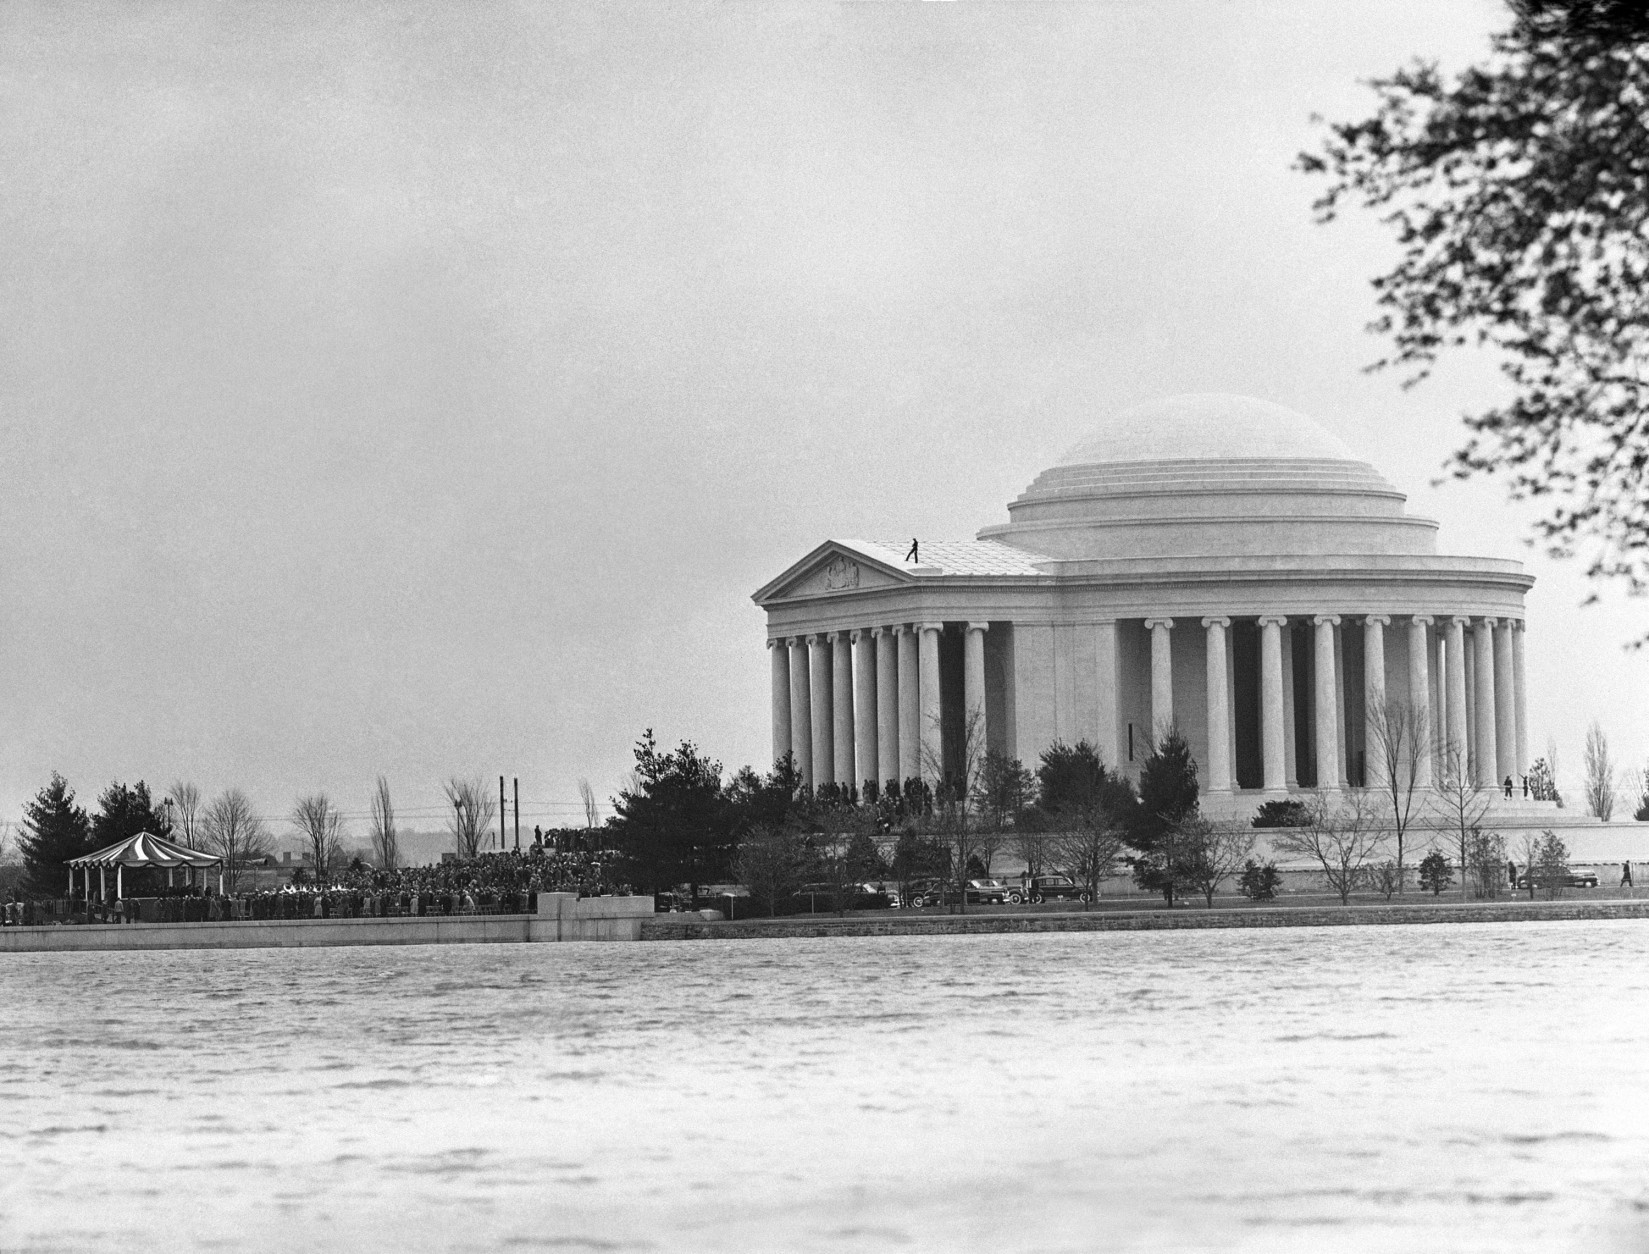 Jefferson Memorial dedication ceremonies, April 13, 1943, looking across the tidal basin in Washington.  Man standing on top of the memorial is a guard. (AP Photo/Gene Abbott)